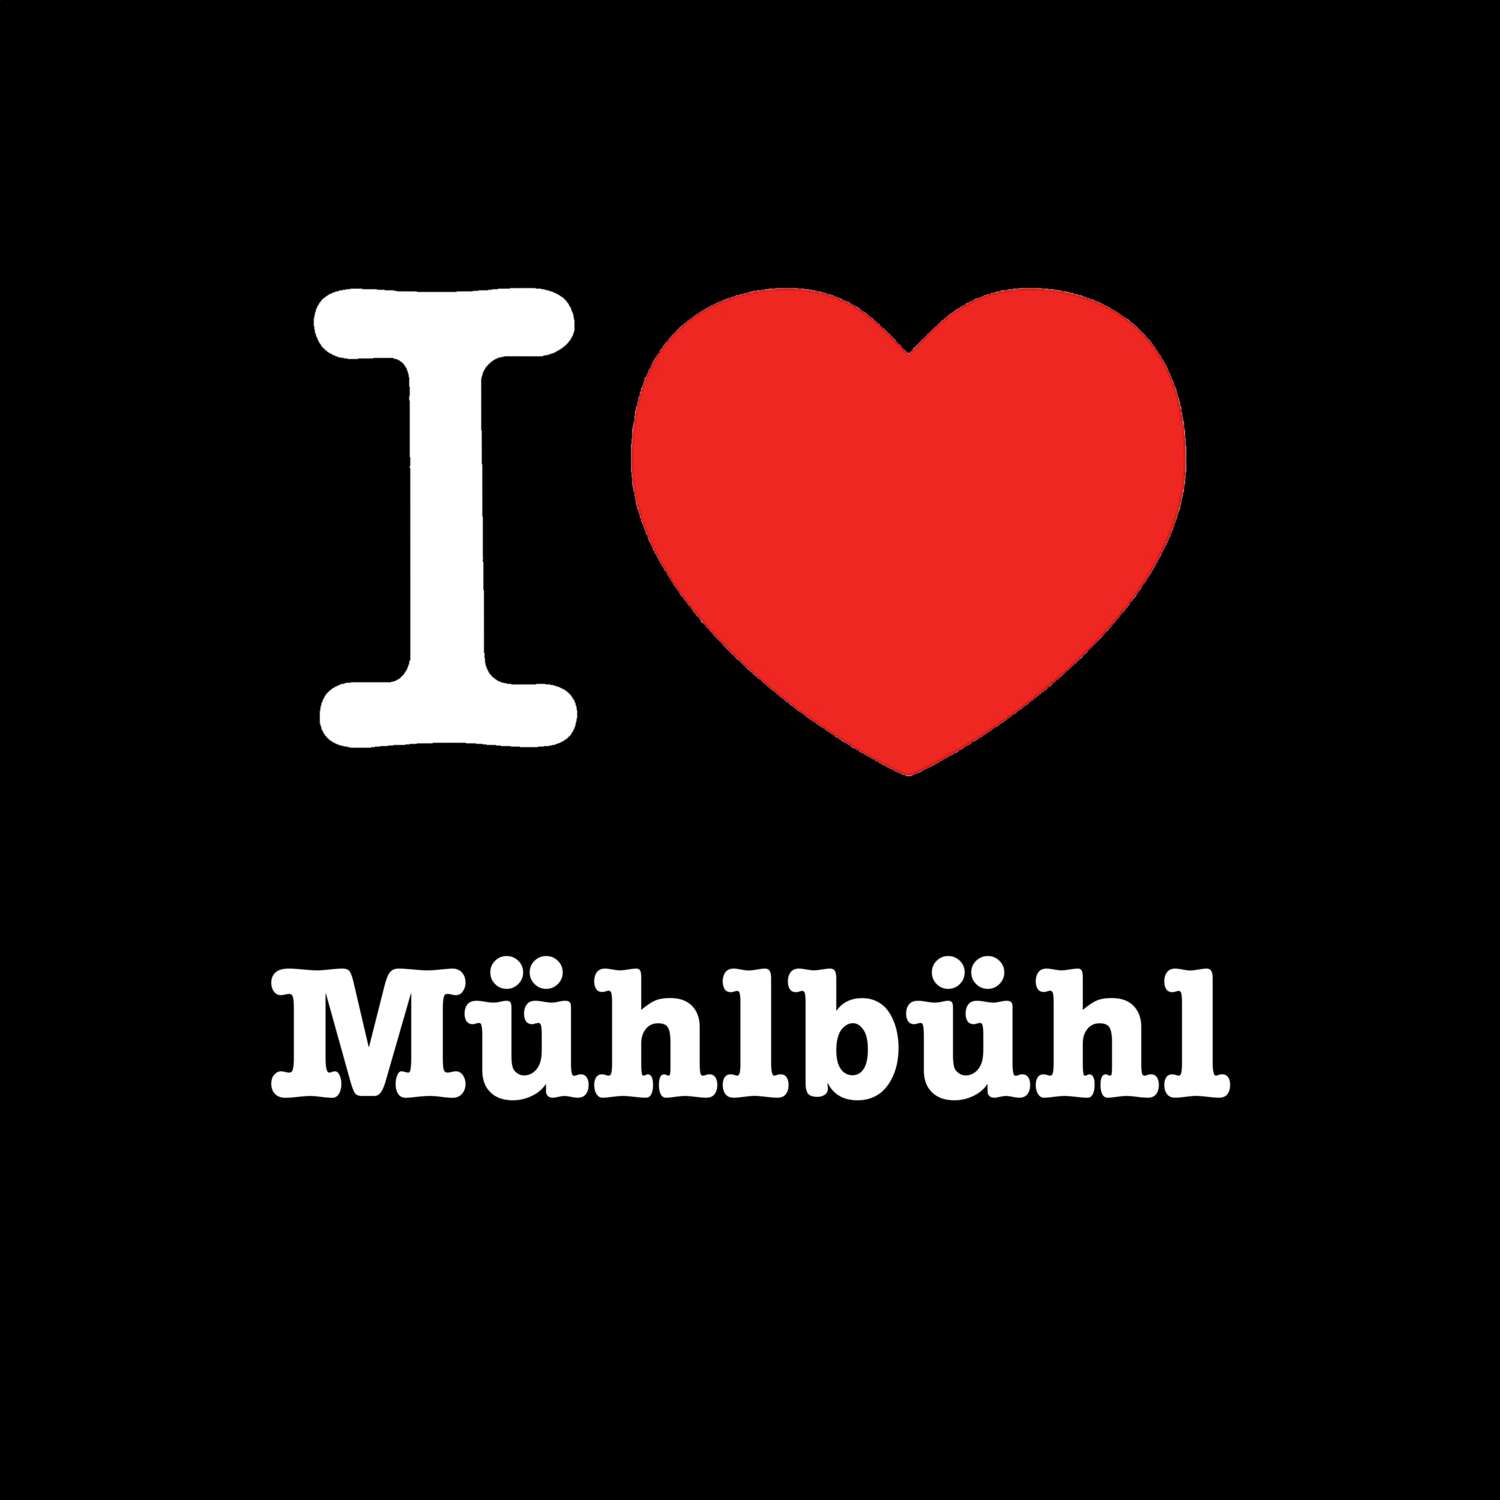 Mühlbühl T-Shirt »I love«